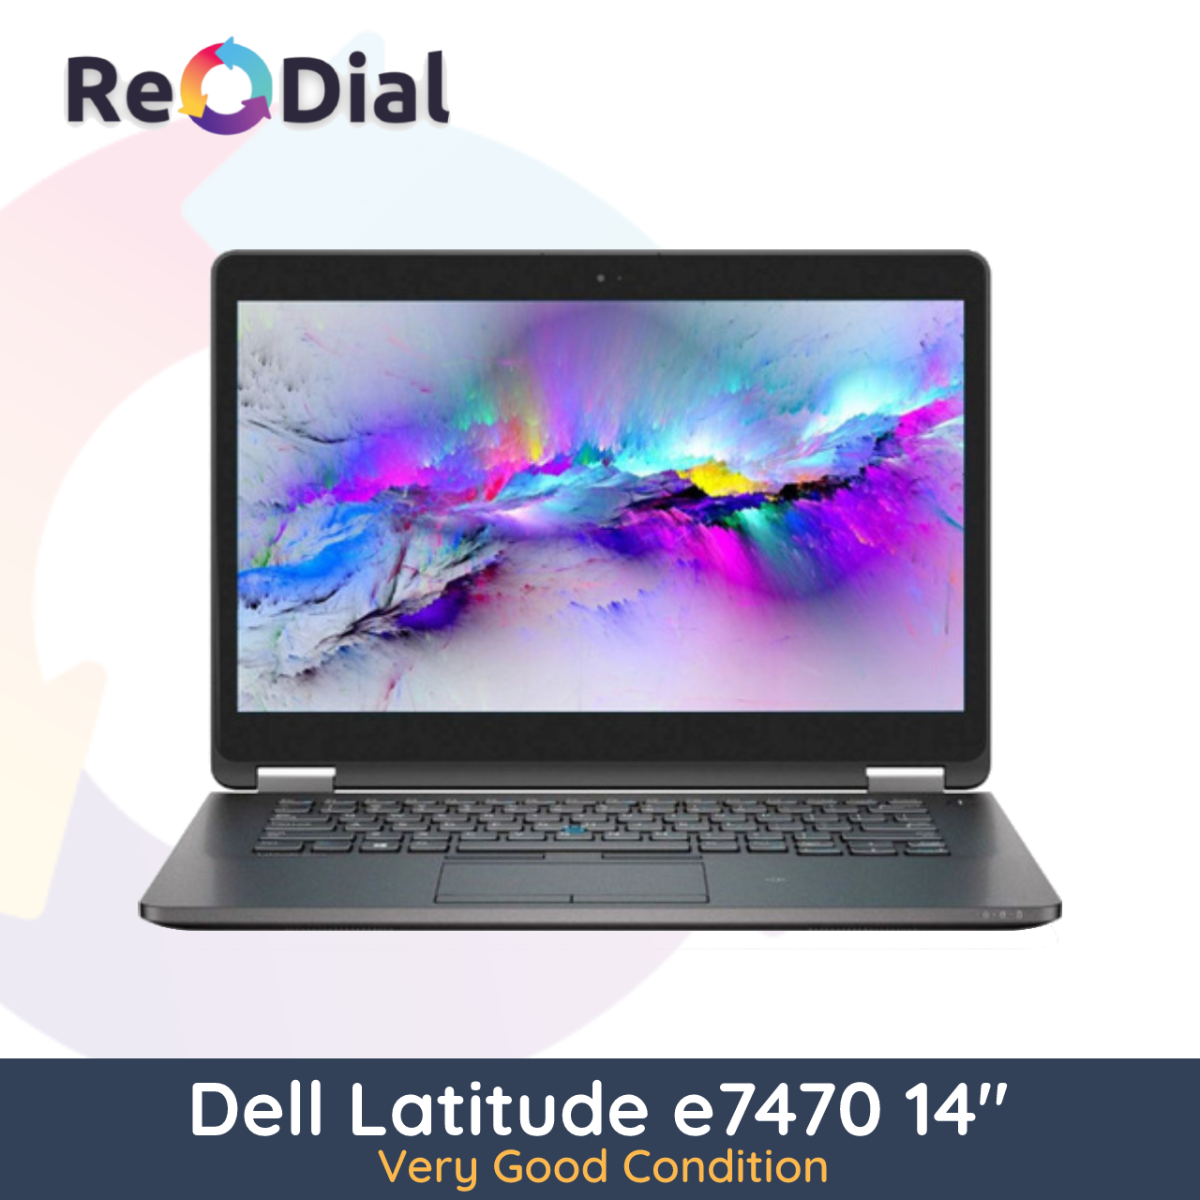 Dell Latitude E7470 14" Laptop i5-6300U 256GB 8GB RAM - Very Good Condition